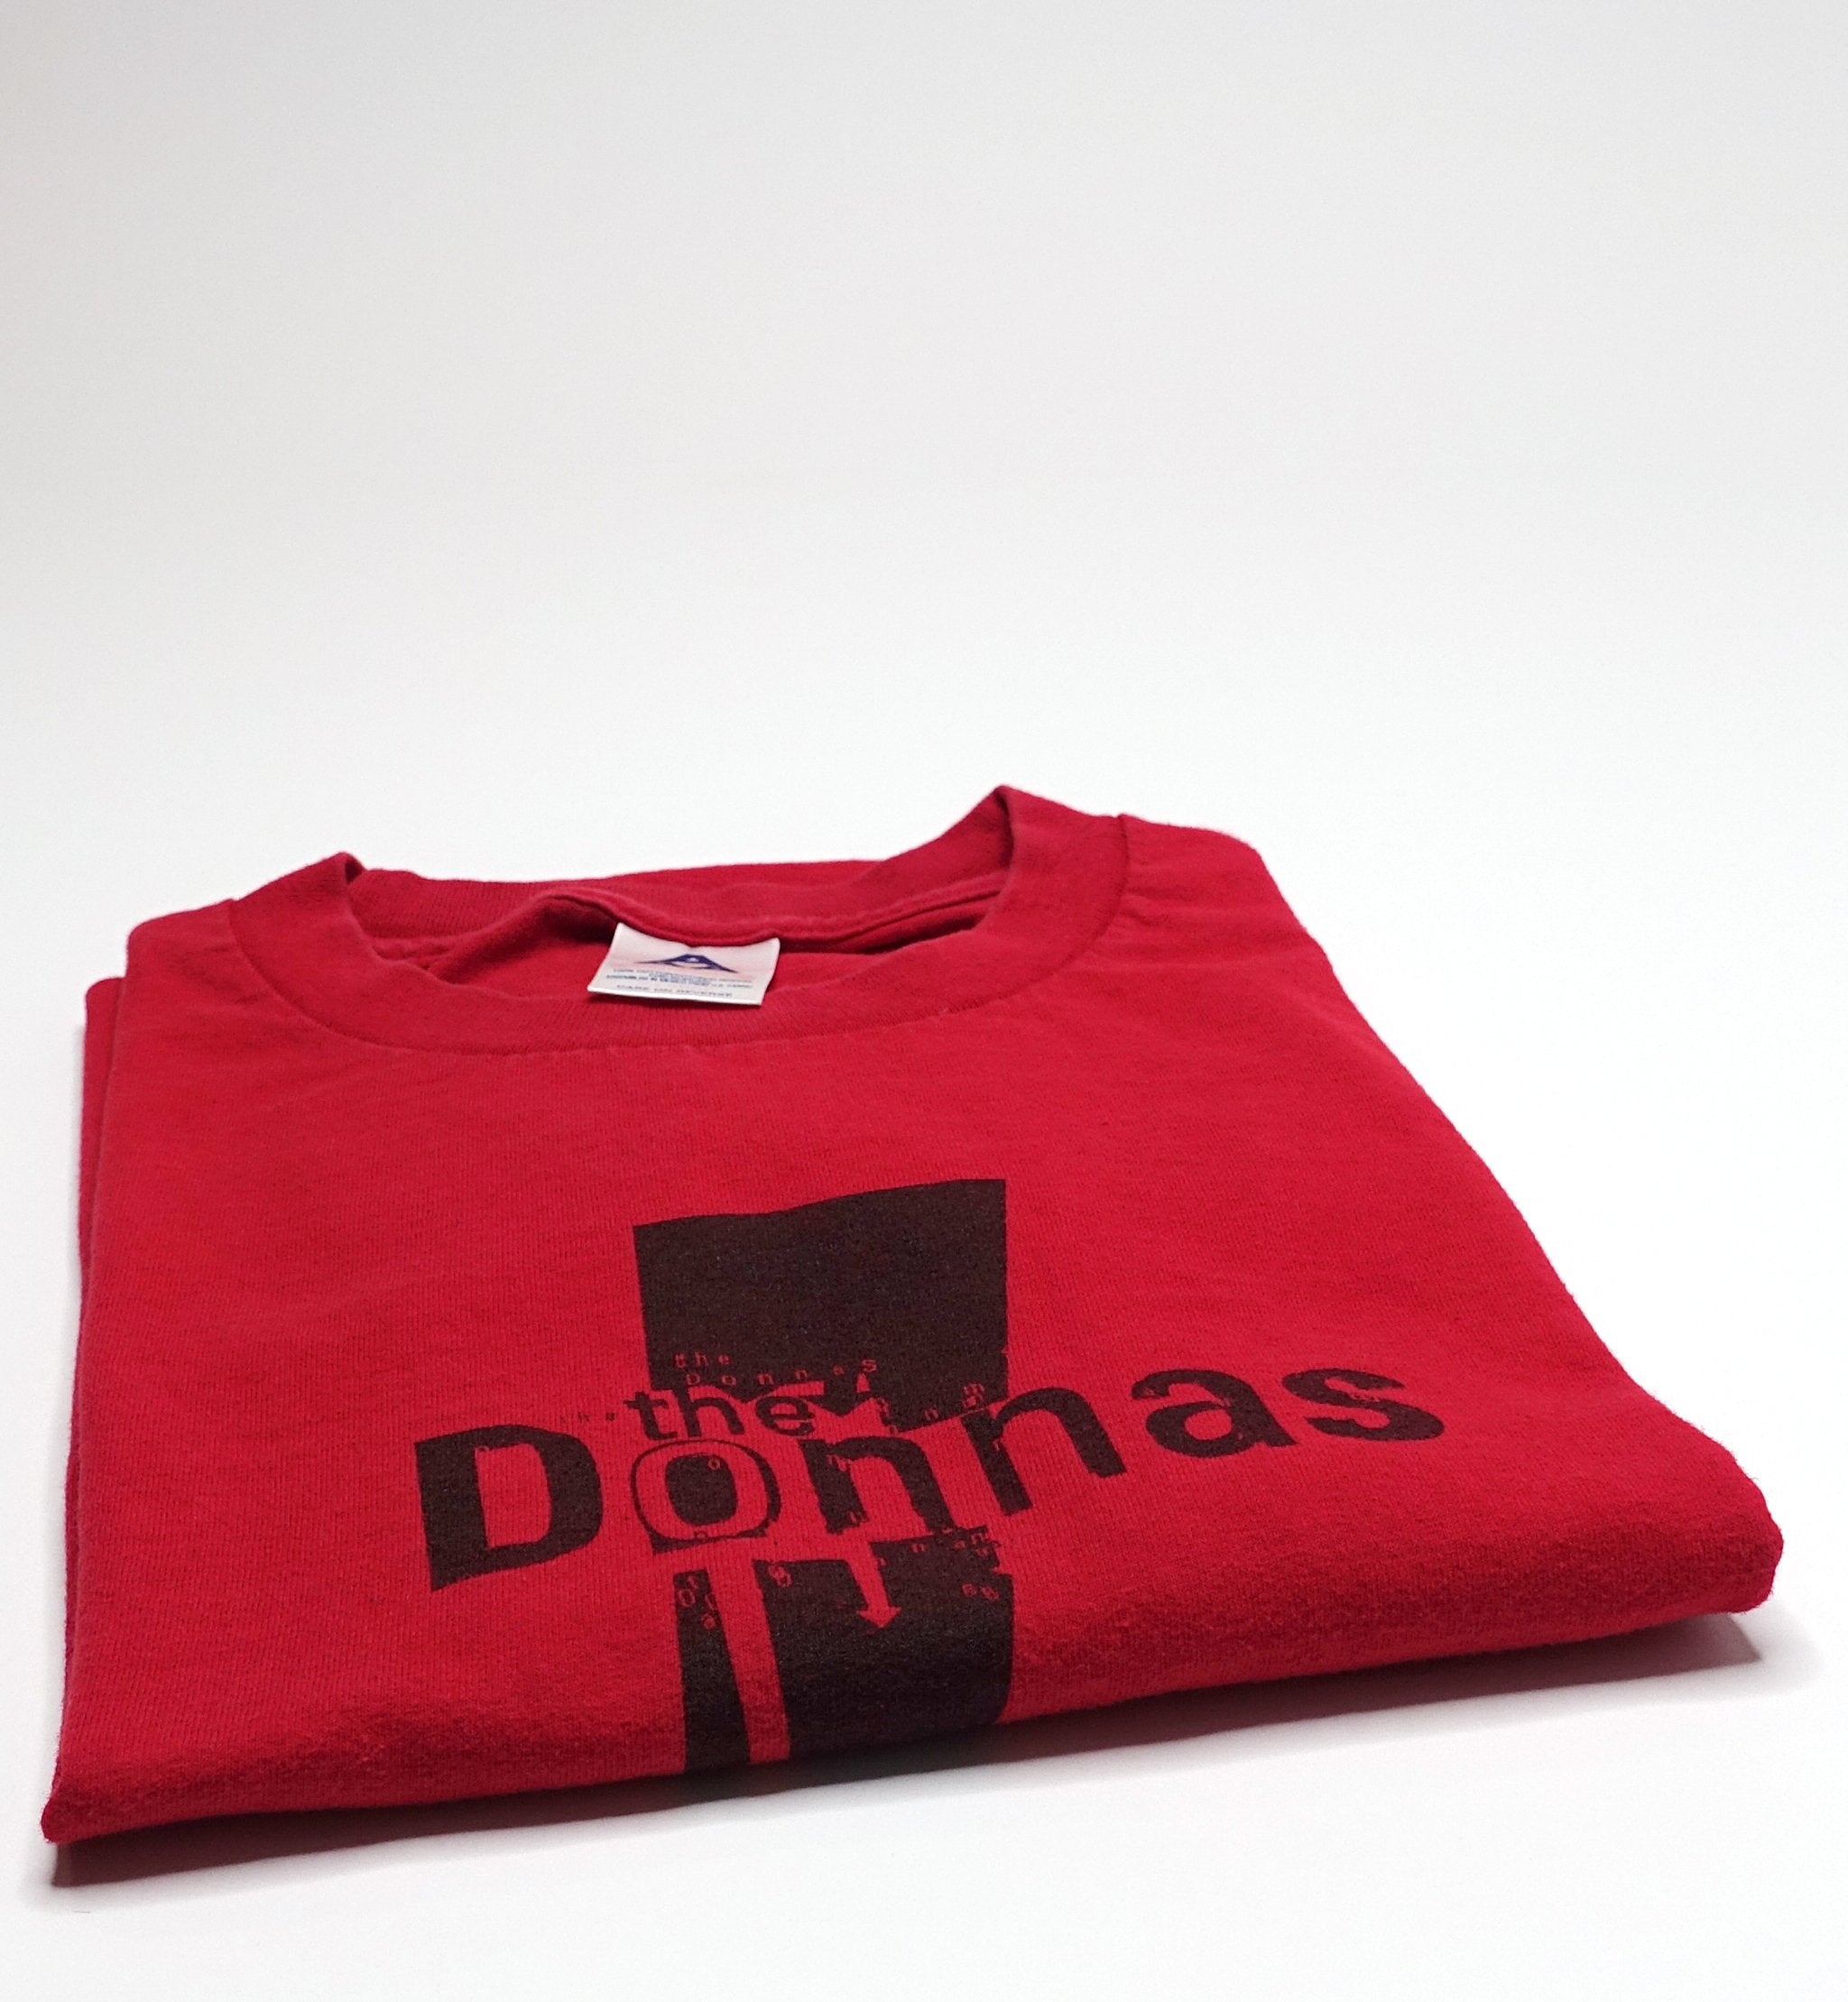 the Donnas - Arrow late 90's Tour Shirt Size XL